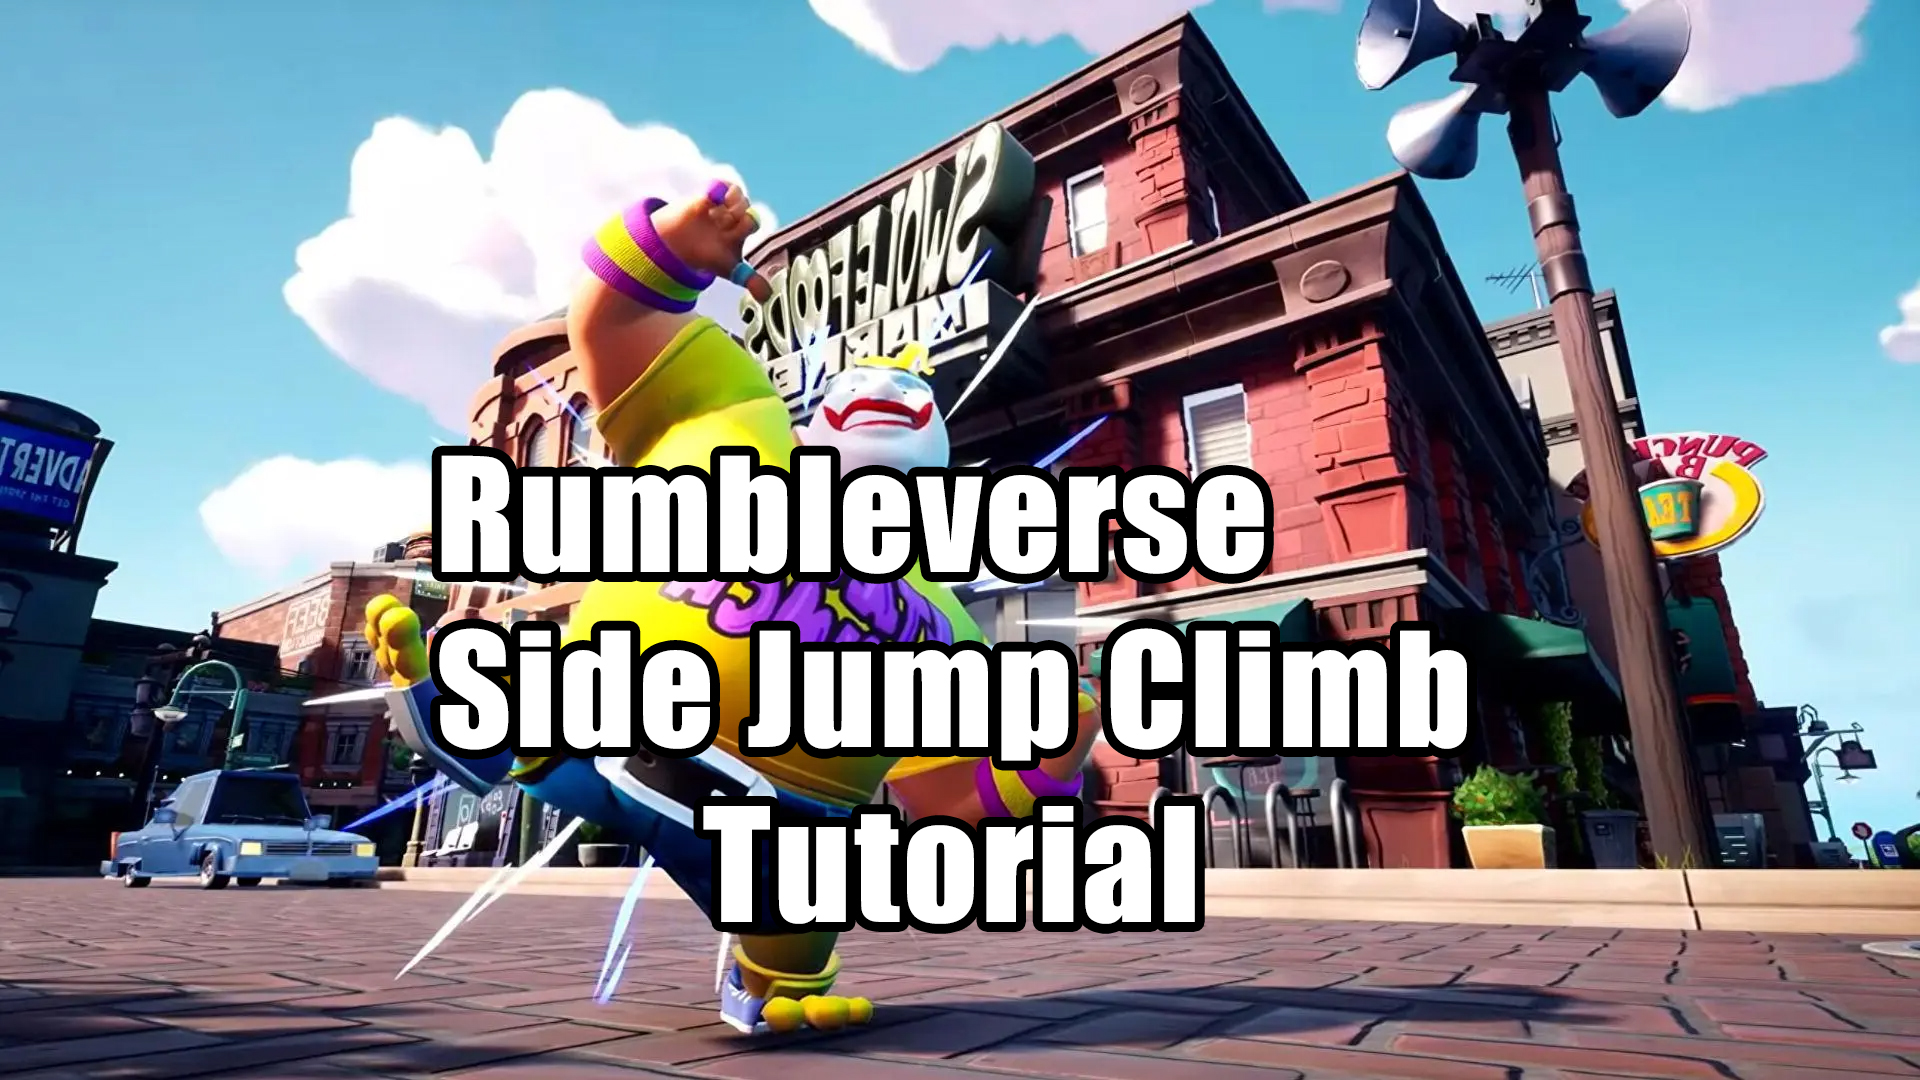 rumbleverse_side_jump_tutorial_indexkep.jpg